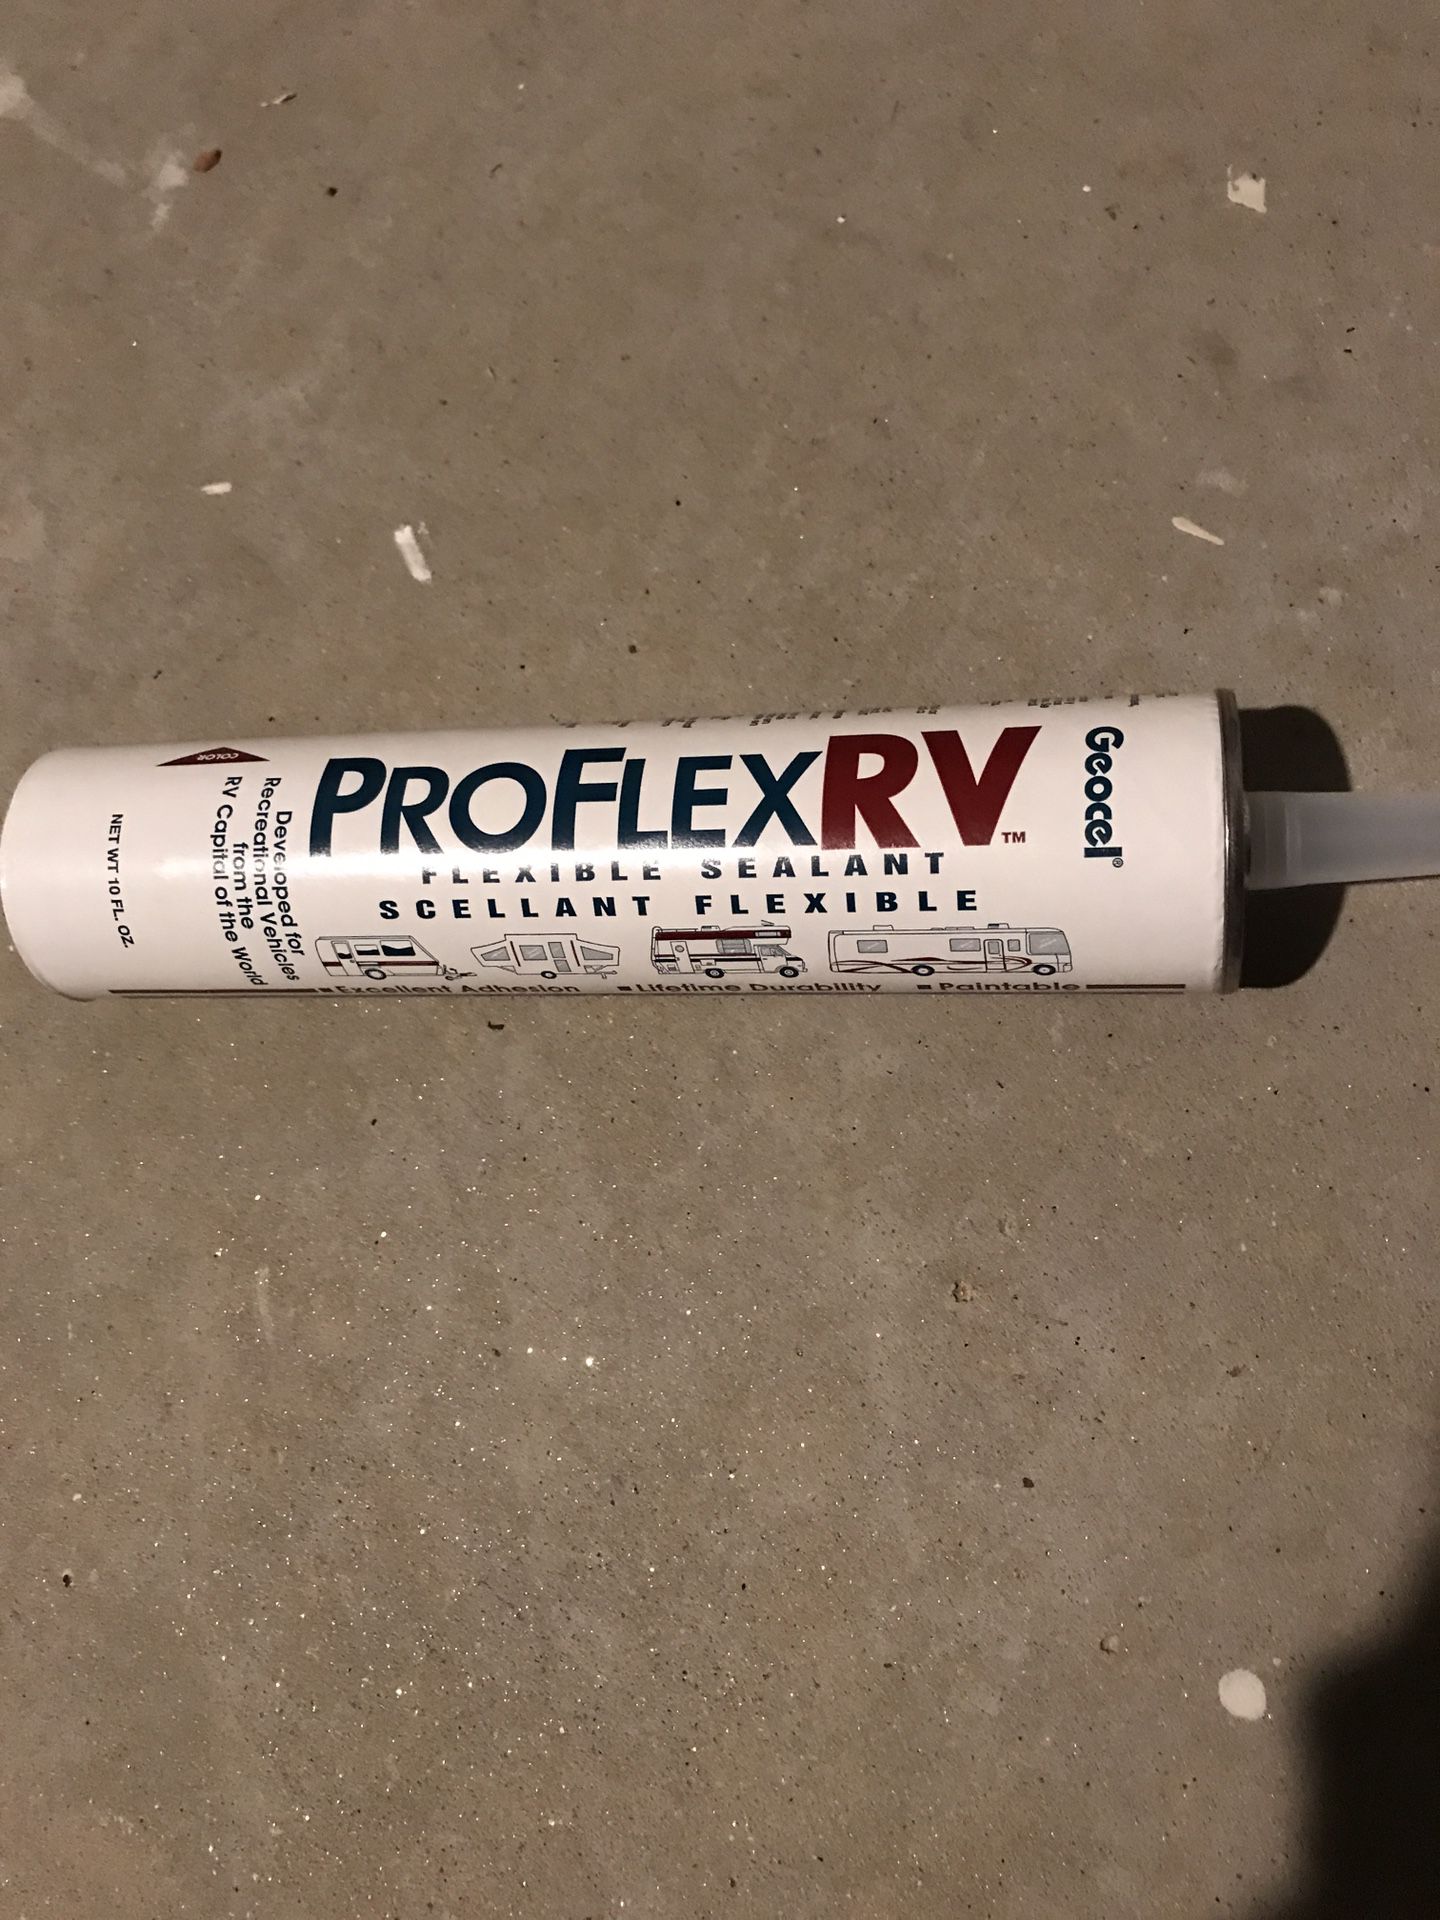 Unopened Proflex RV caulk/sealant